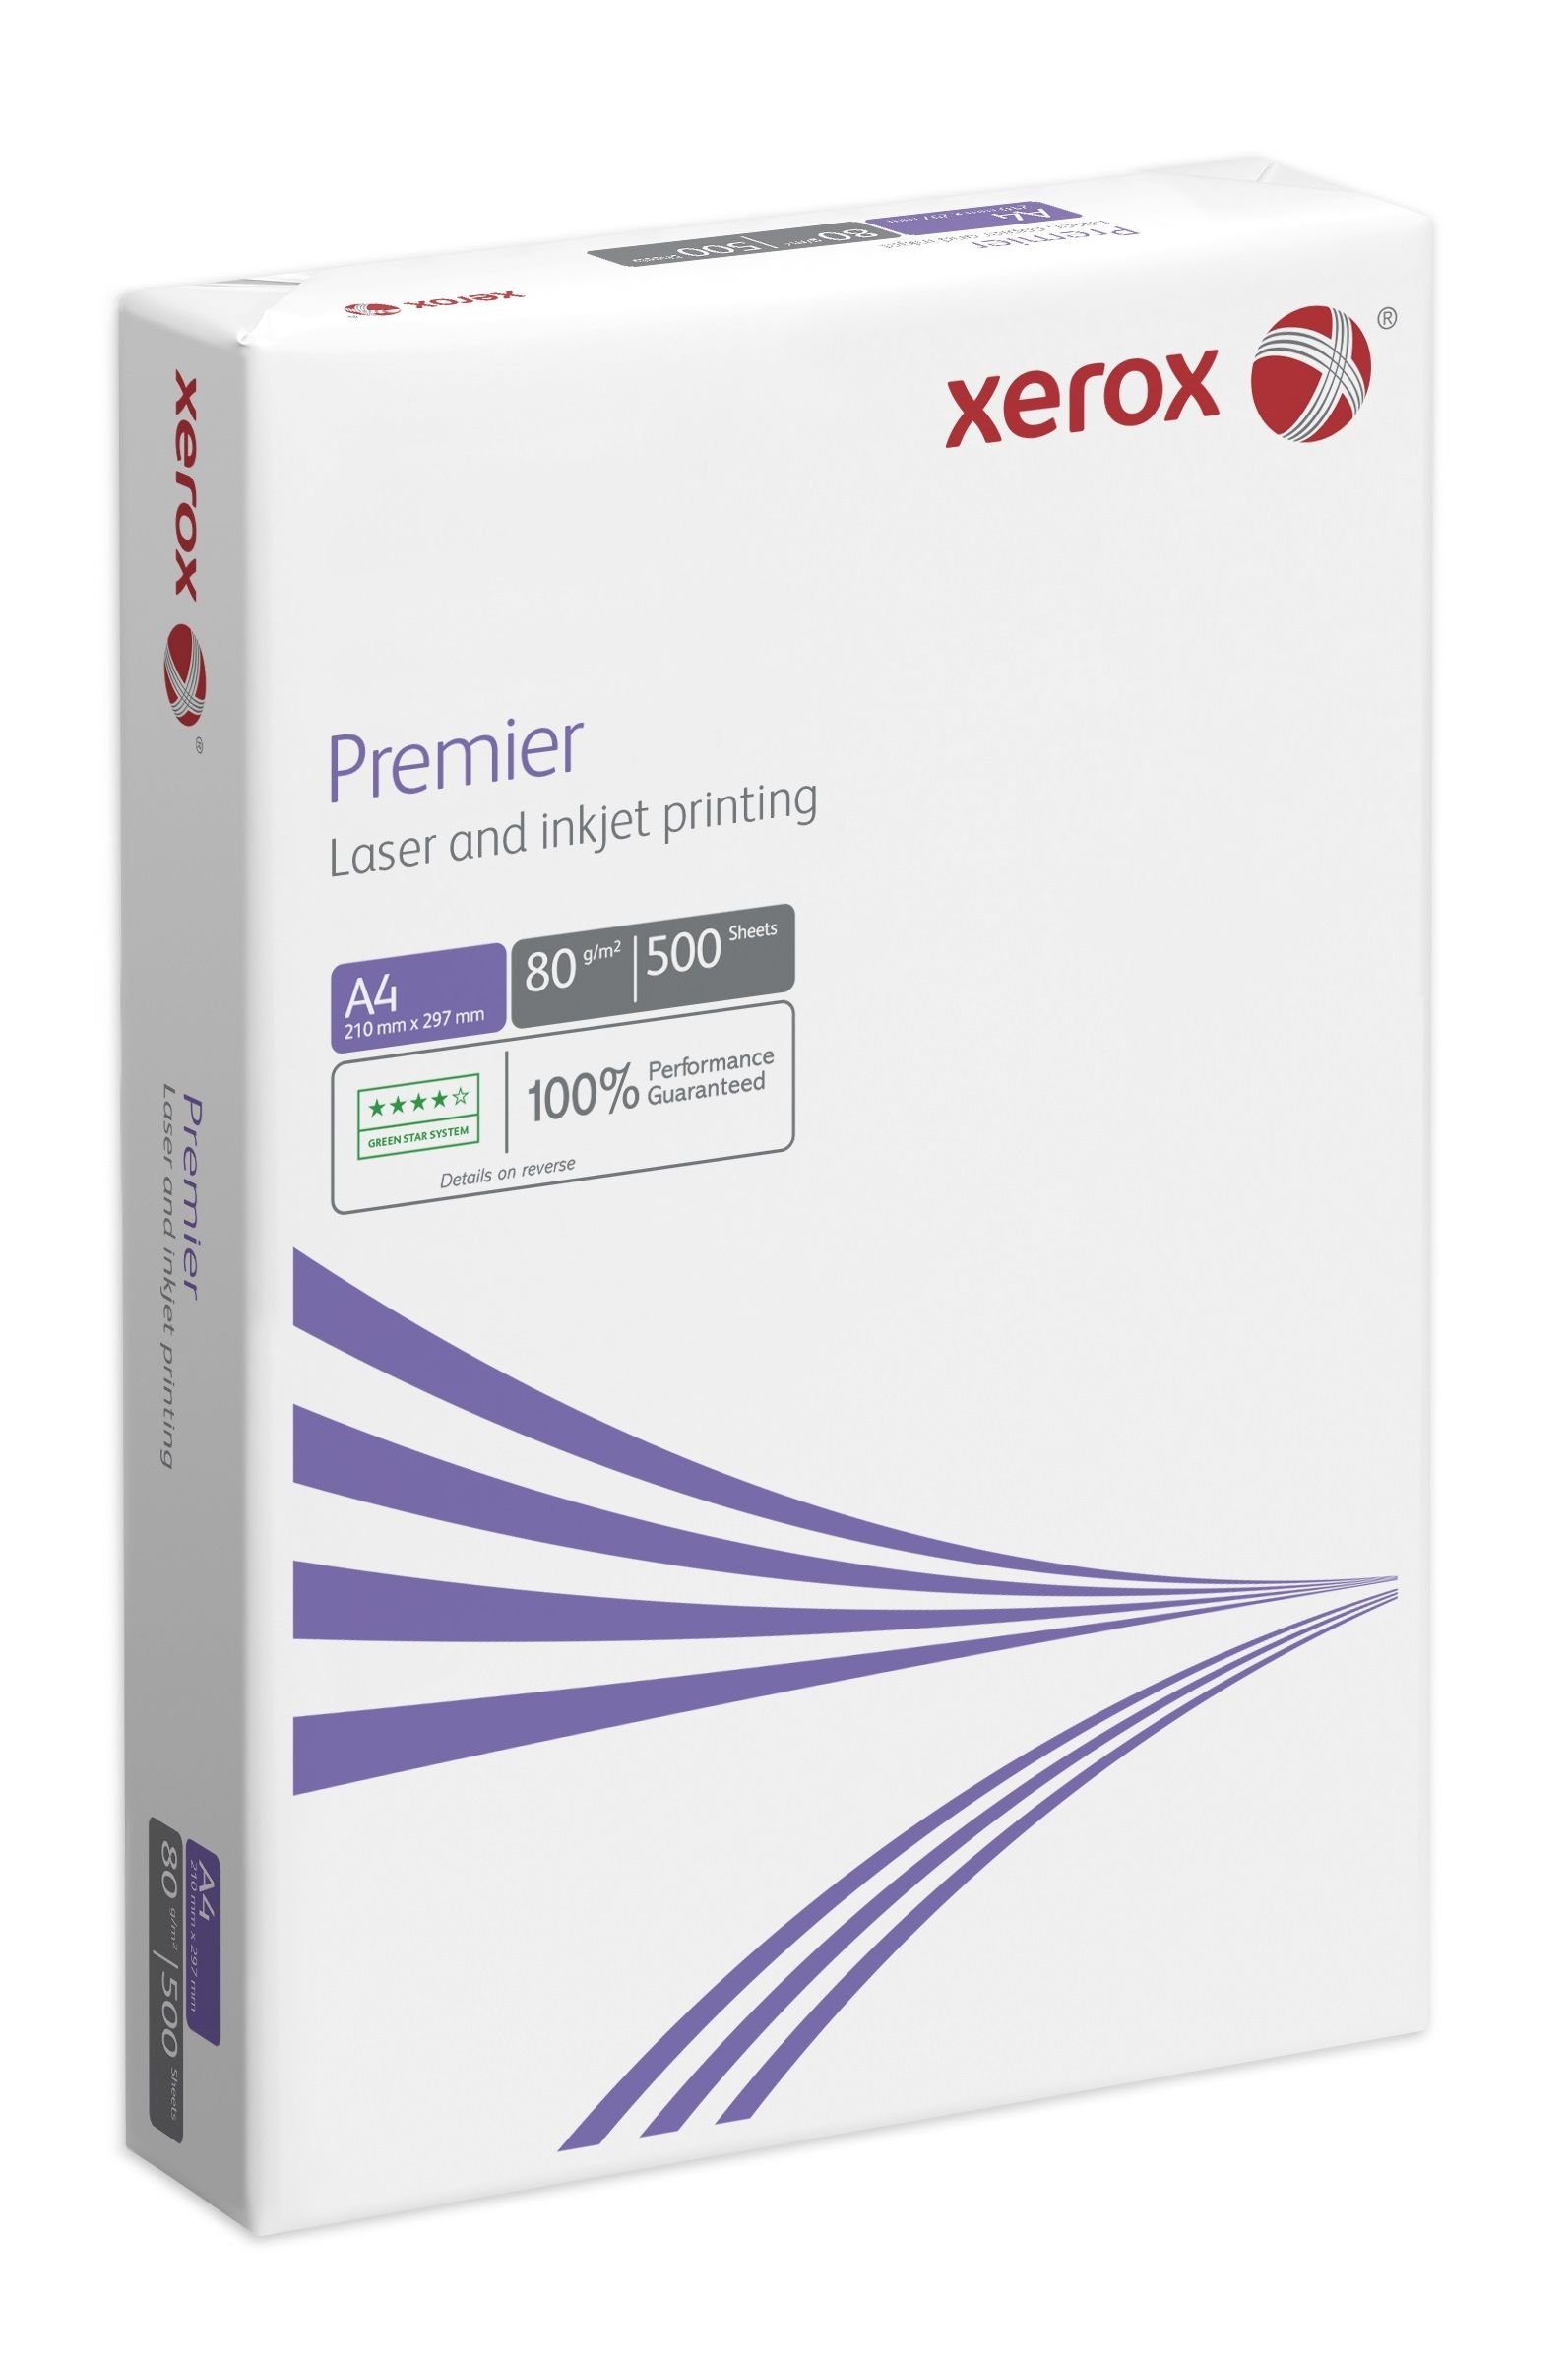 Xerox Druckerpapier Premier ECF - A4, 80 g/qm, weiß, 500 Blatt